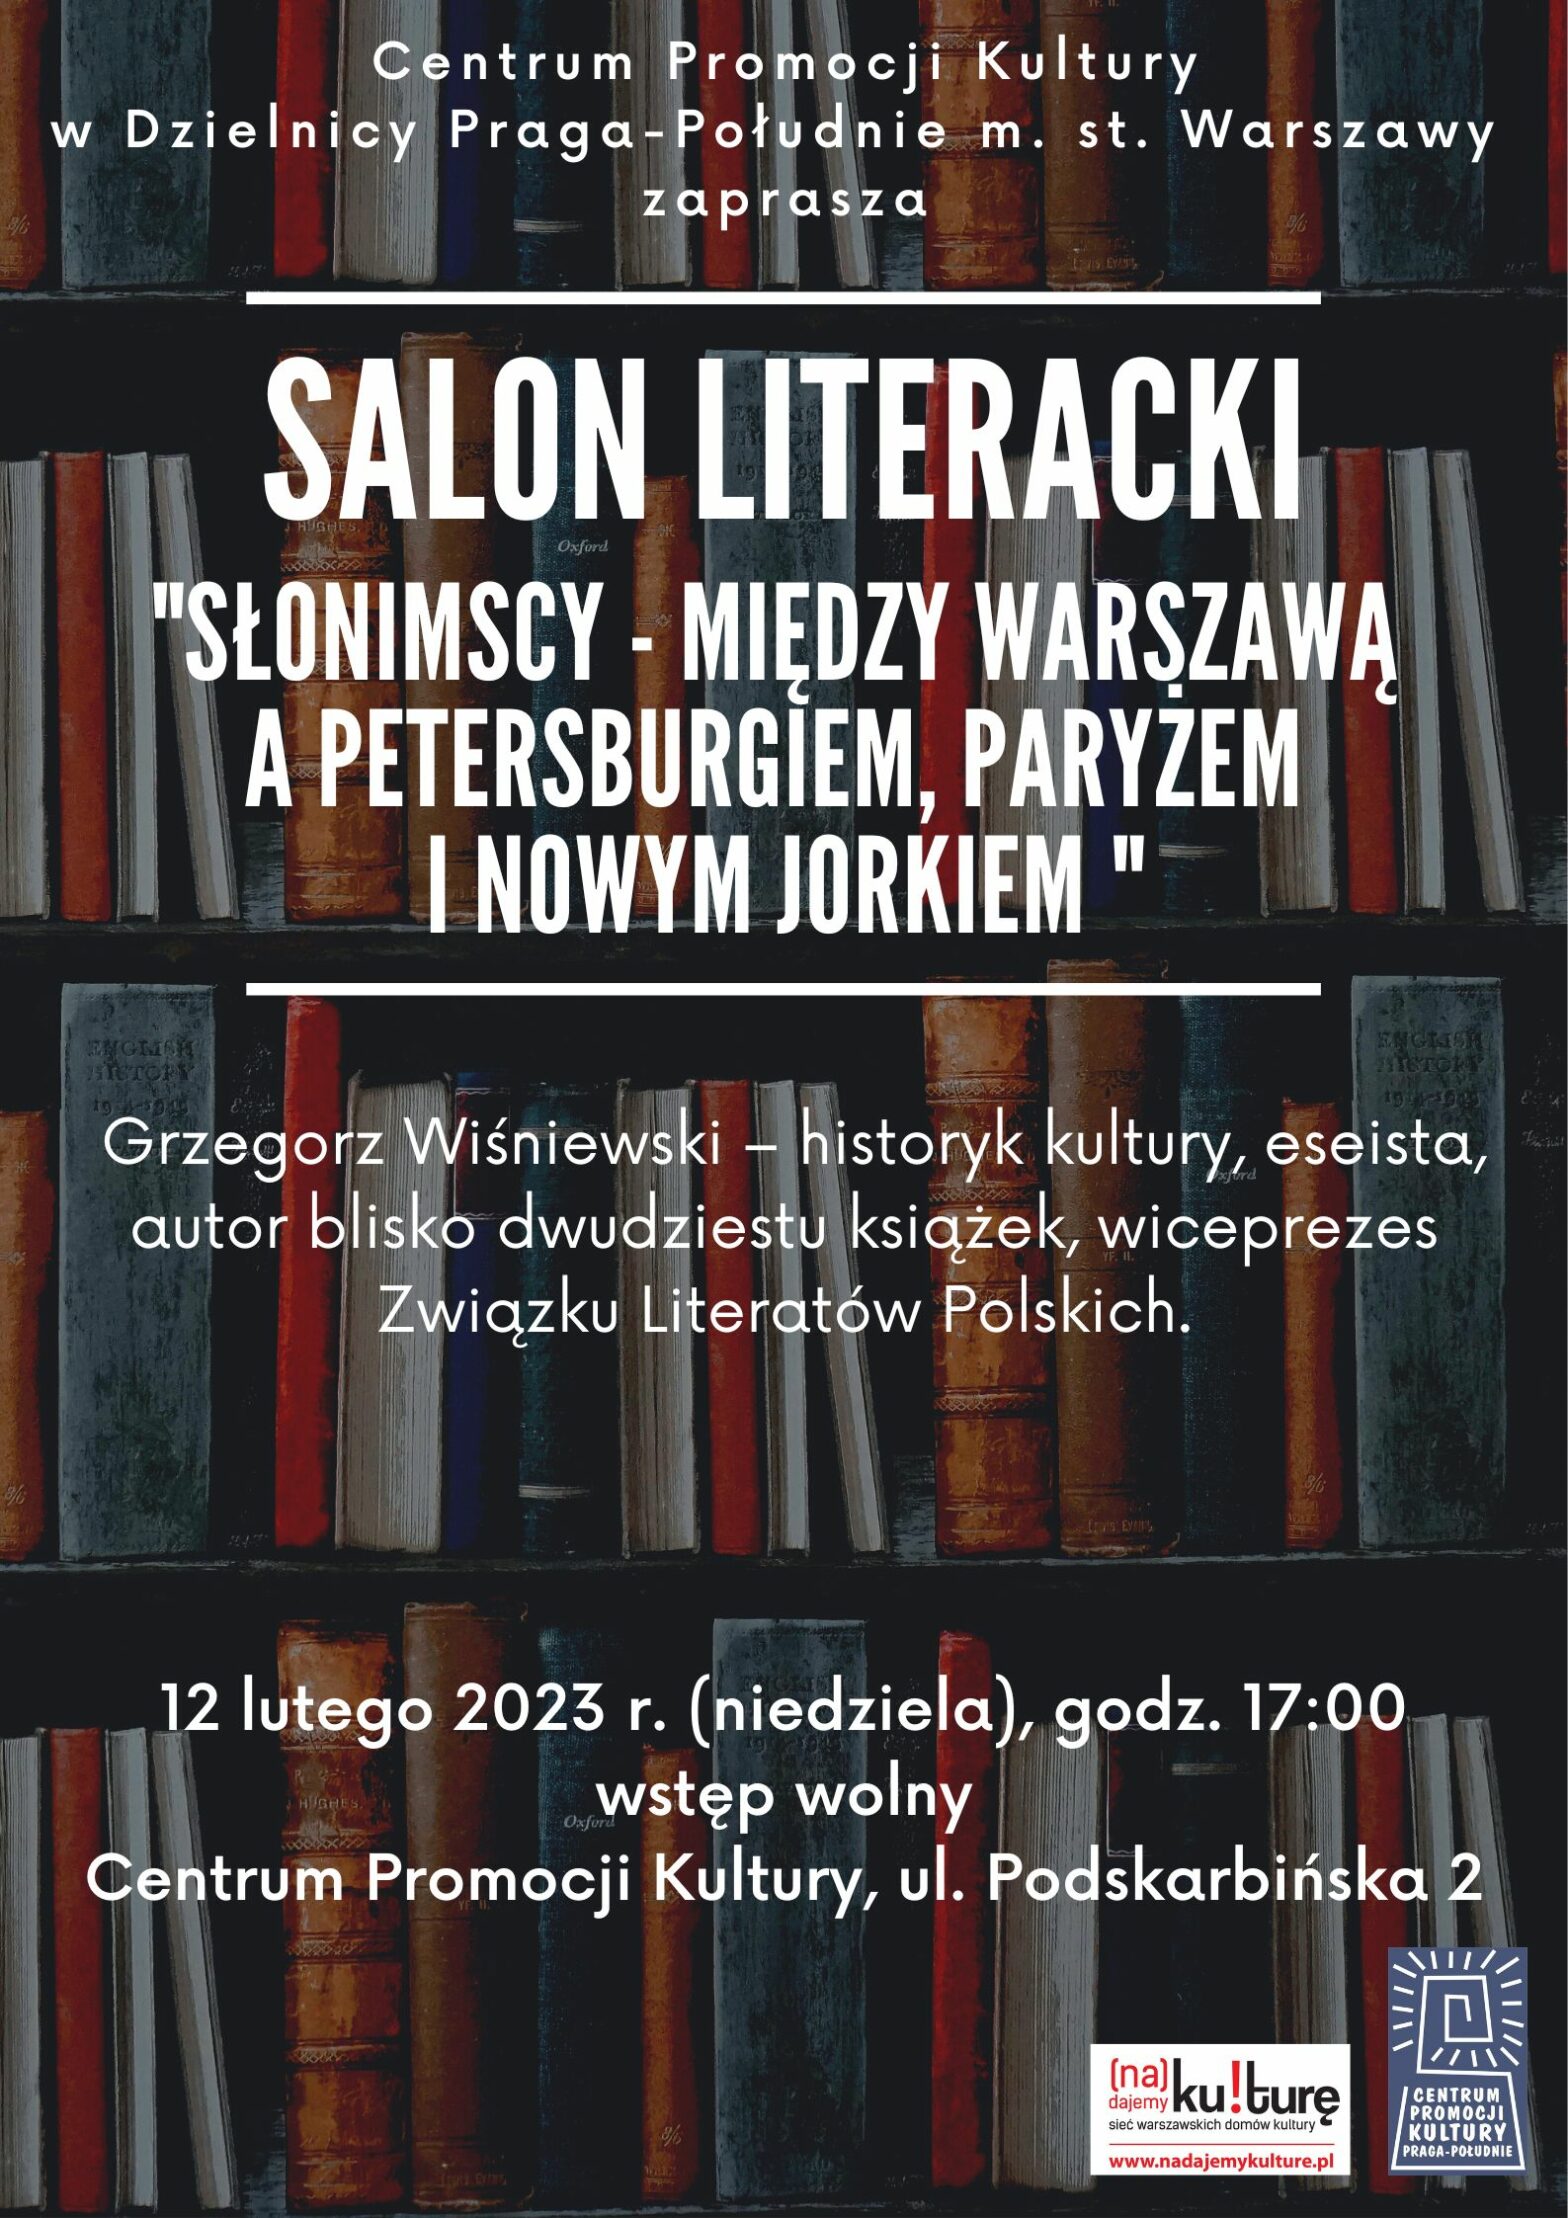 Salon Literacki: Słonimscy